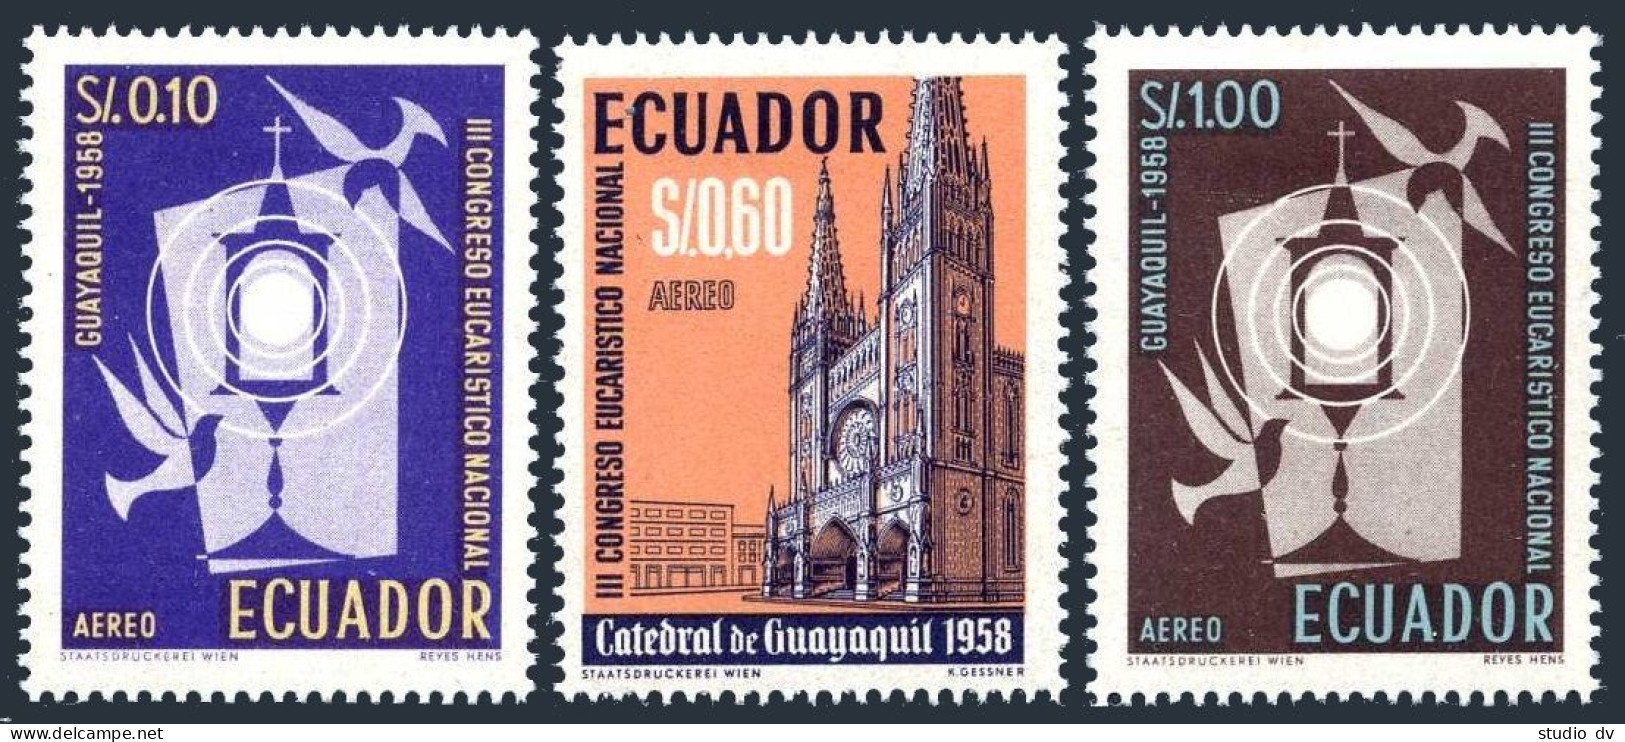 Ecuador C327-C329, MNH. Michel 974-976. Eucharist Congress, 1958. - Ecuador